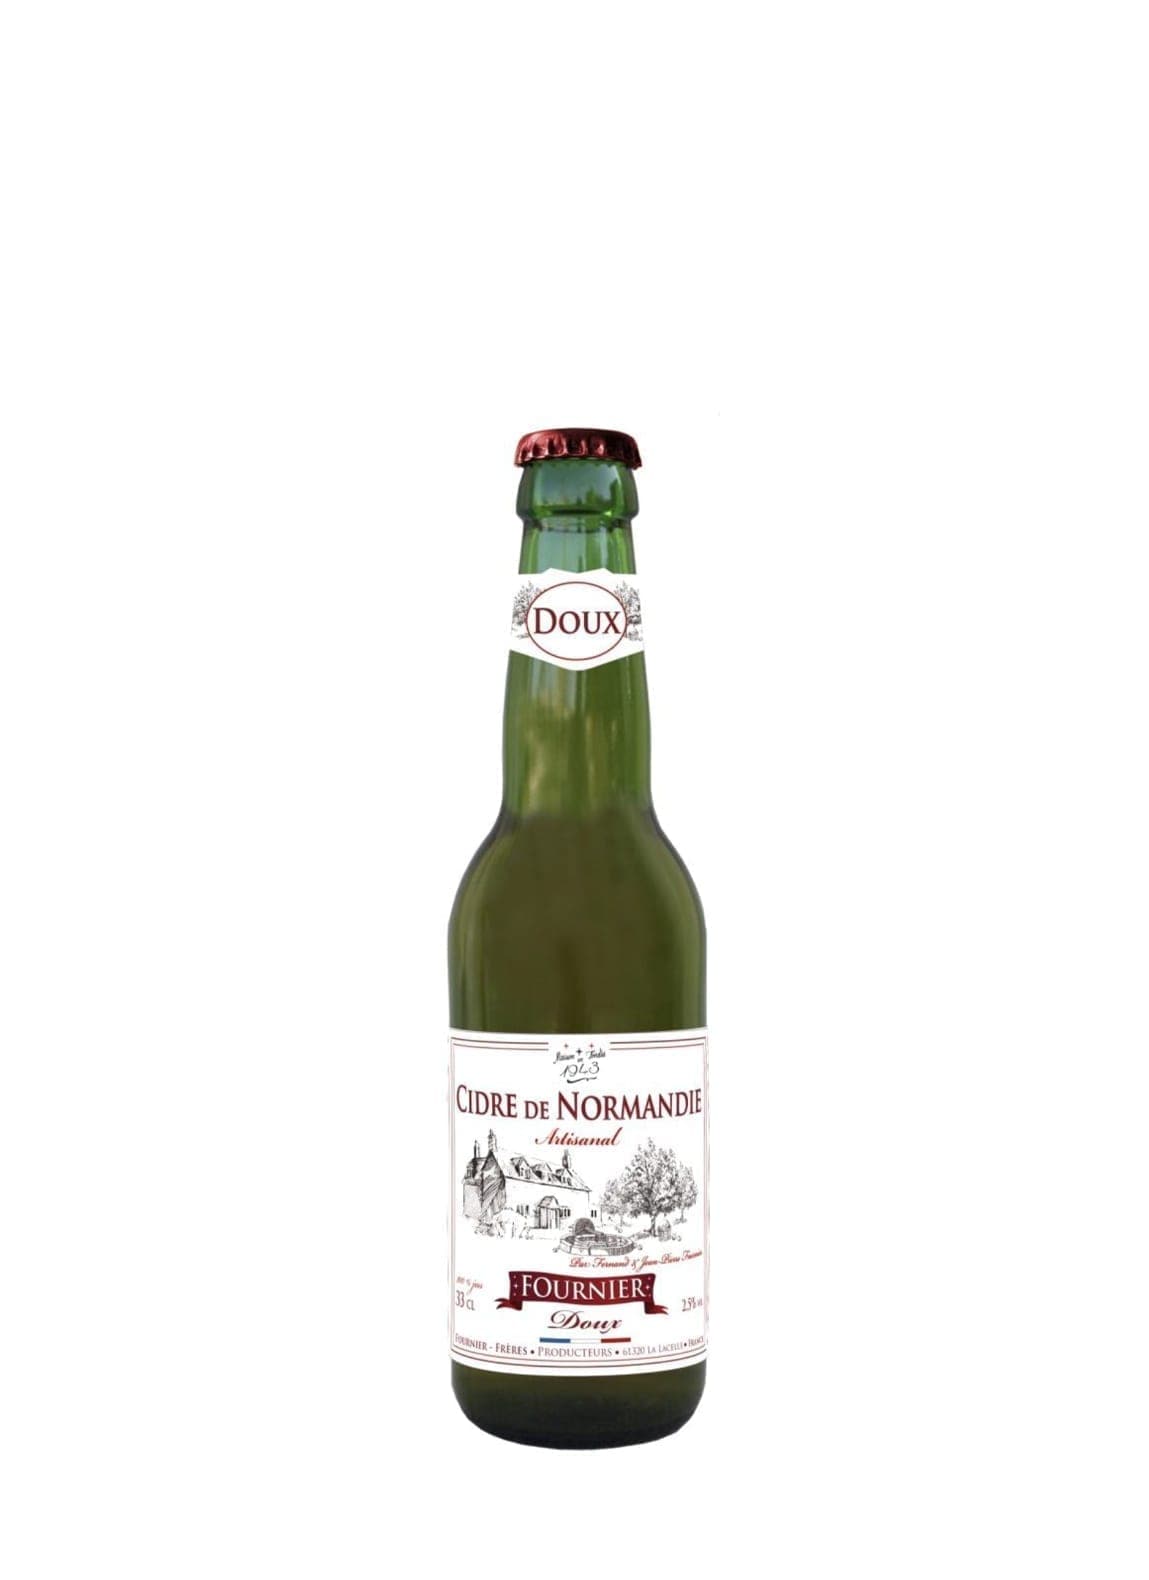 Fournier Doux Cidre de Normandie (Sweet Apple Cider) Artisanal 2.5% 330ml | Hard Cider | Shop online at Spirits of France